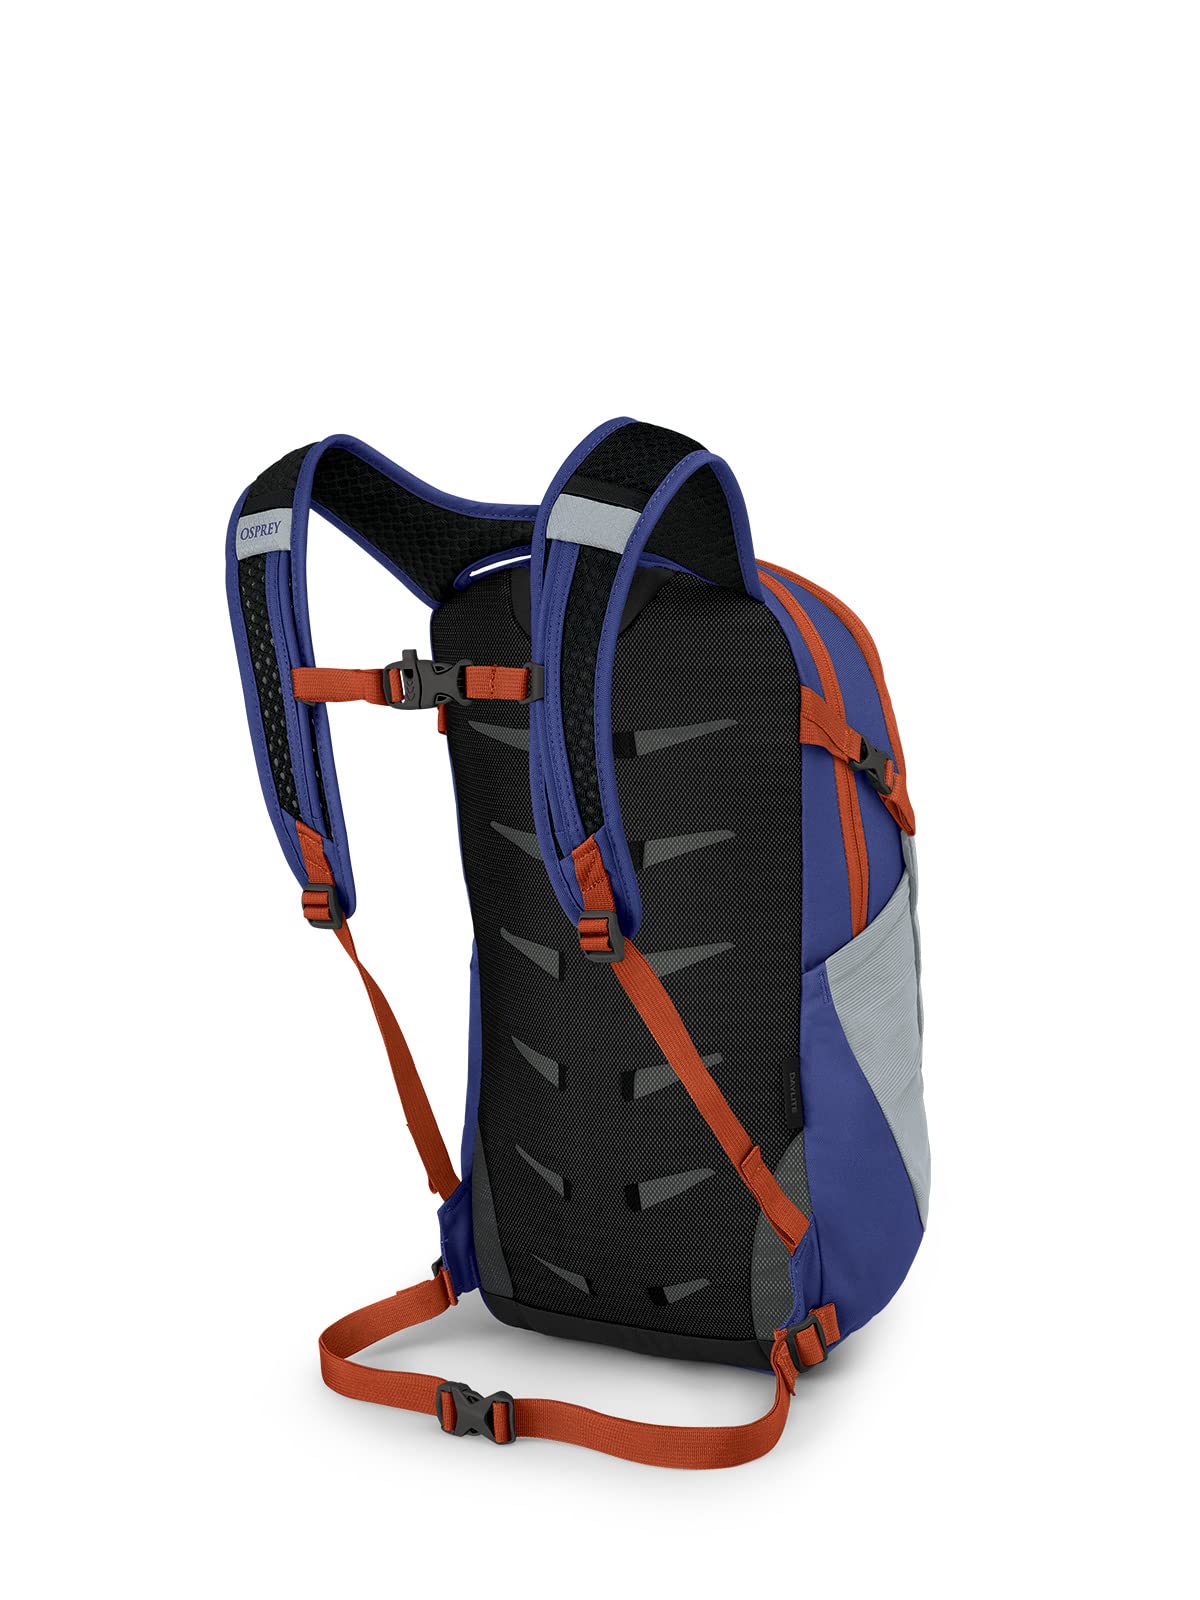 Osprey Daylite Commuter Backpack, Silver Lining/Blueberry